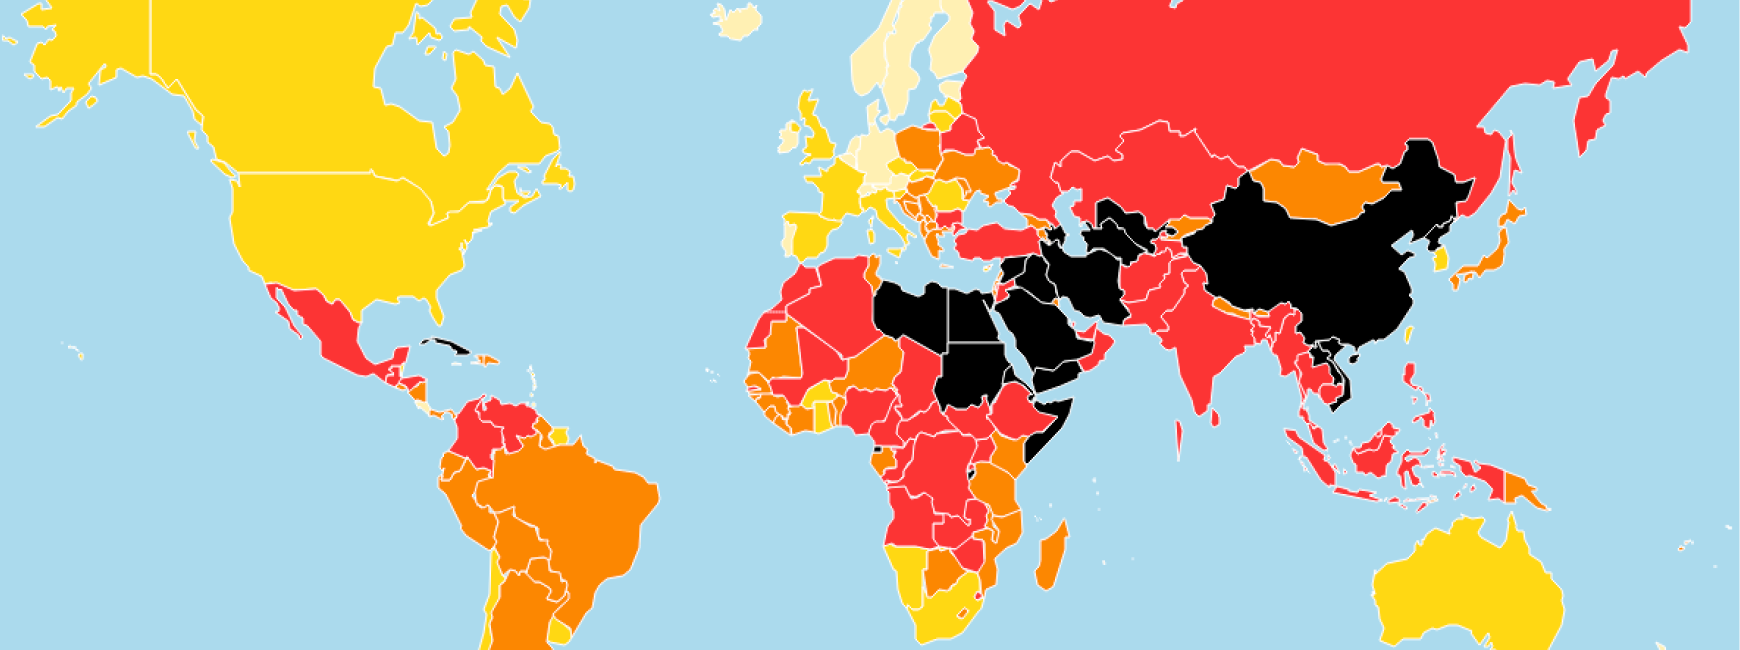 2020 World Press Freedom Index map